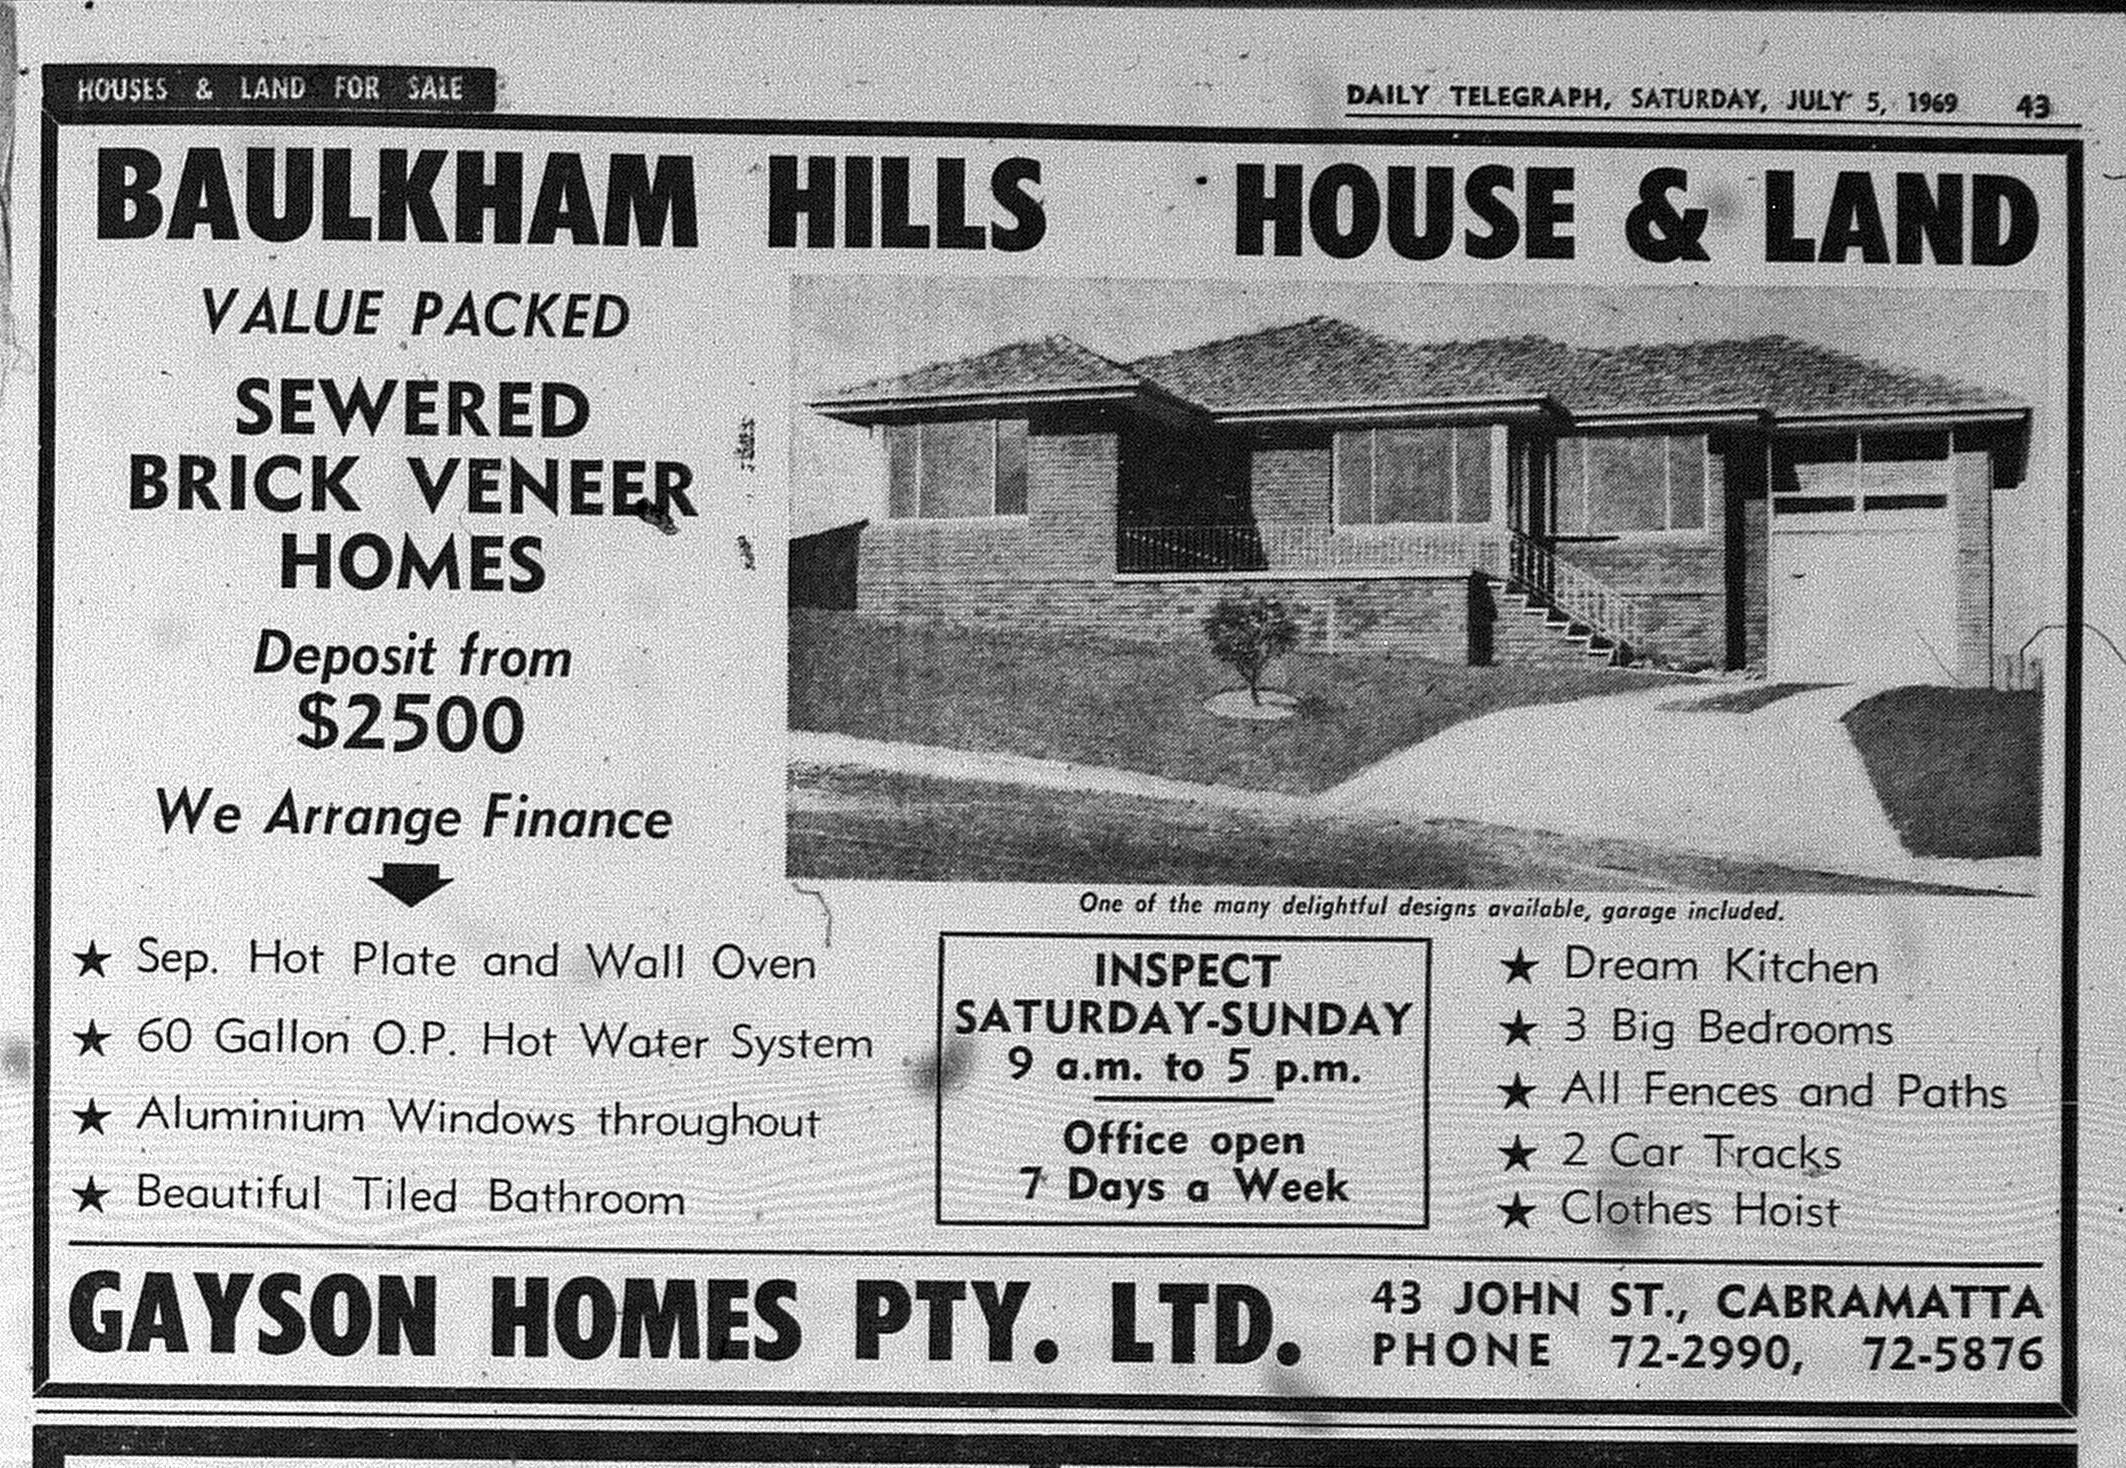 Gayson Homes Ad July 5 1969 daily telegraph 43